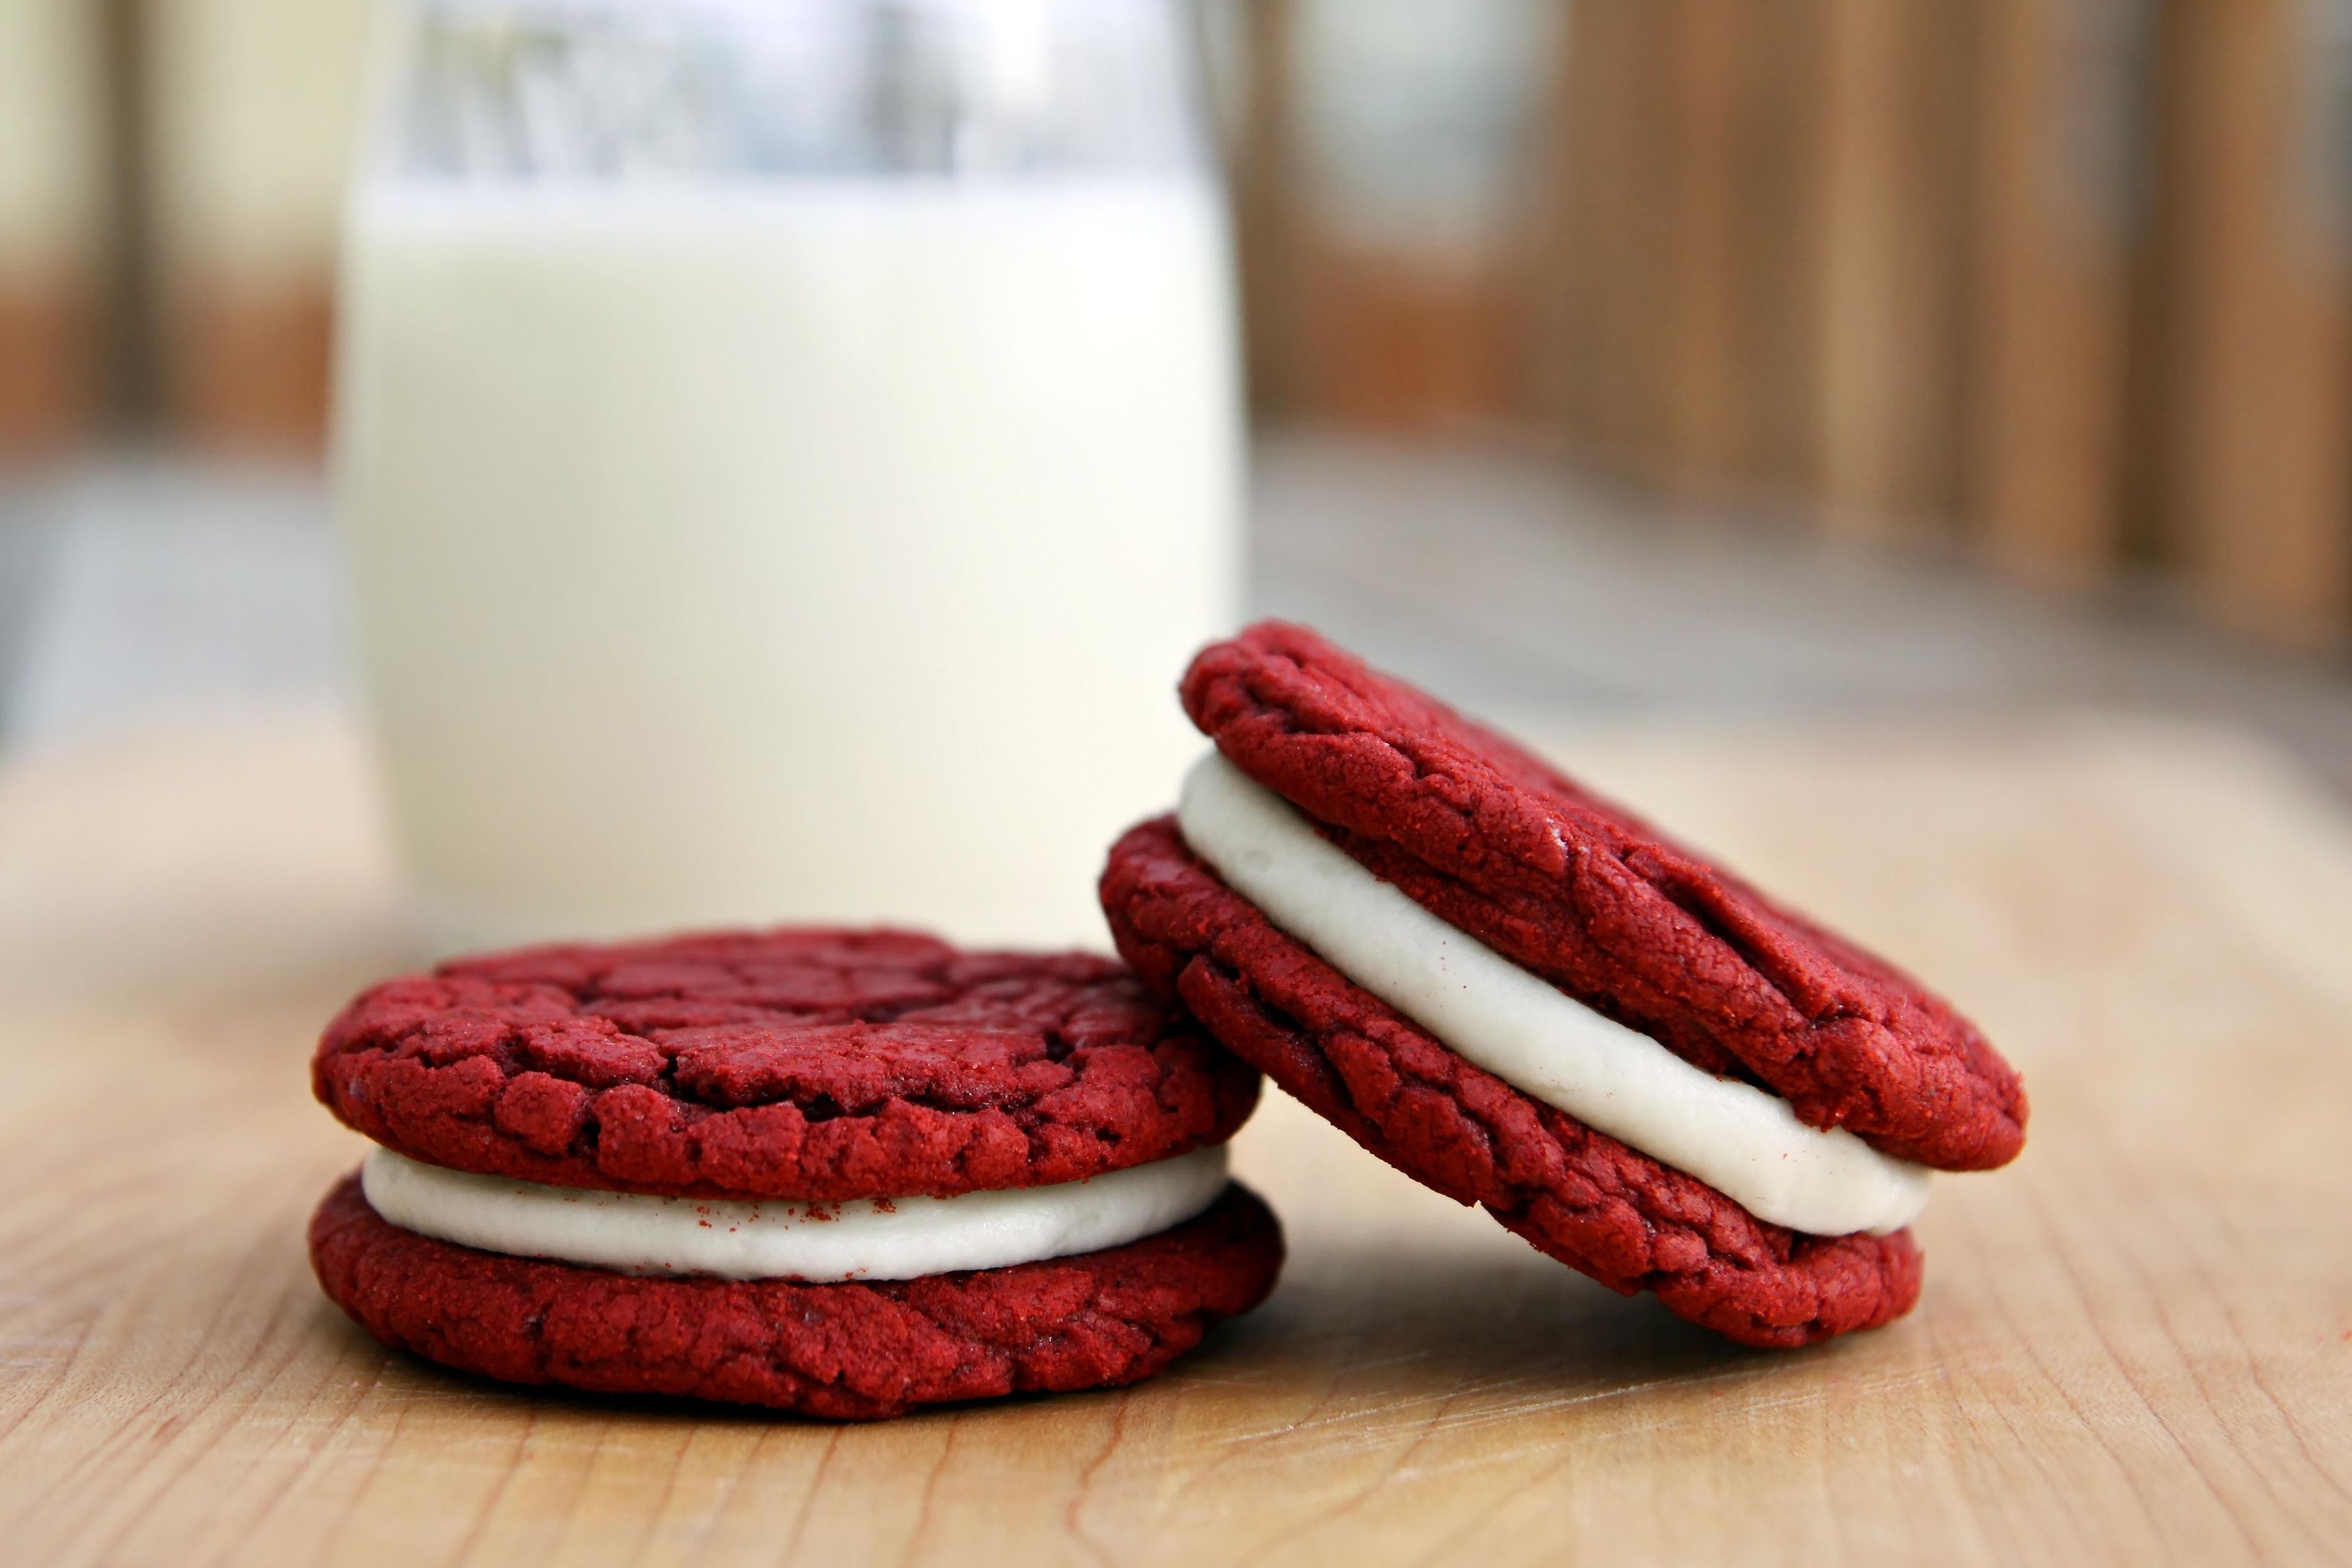 Red velvet cookies with cream and milk.